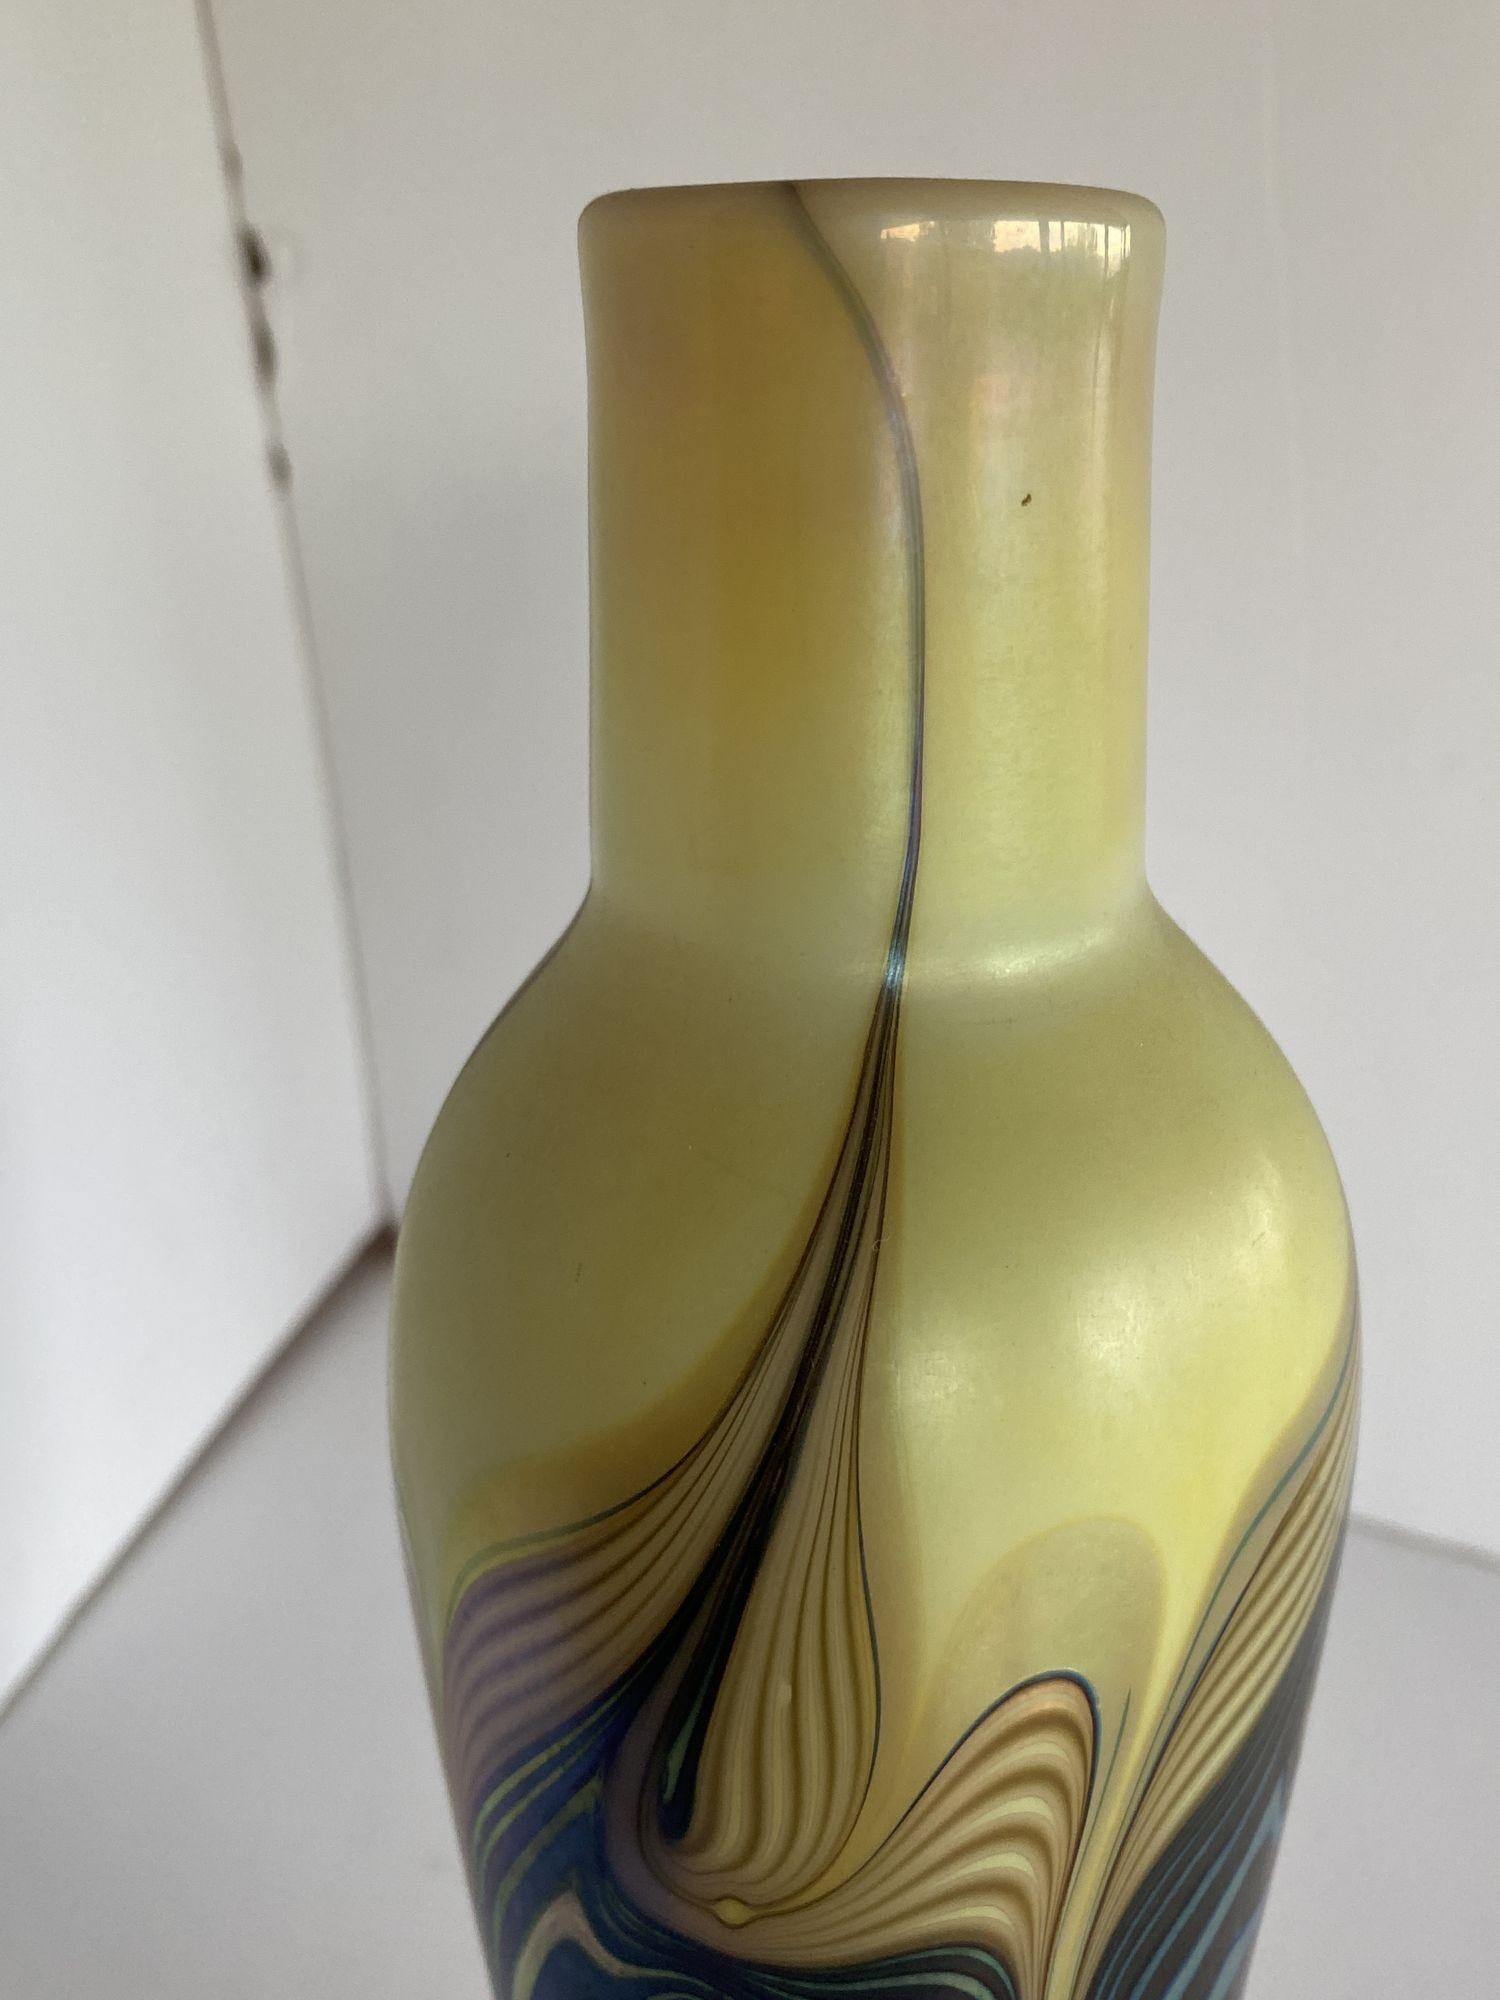 Iridescent 7 color art glass vase flower vase with a varied ripple pattern.

Signed: 